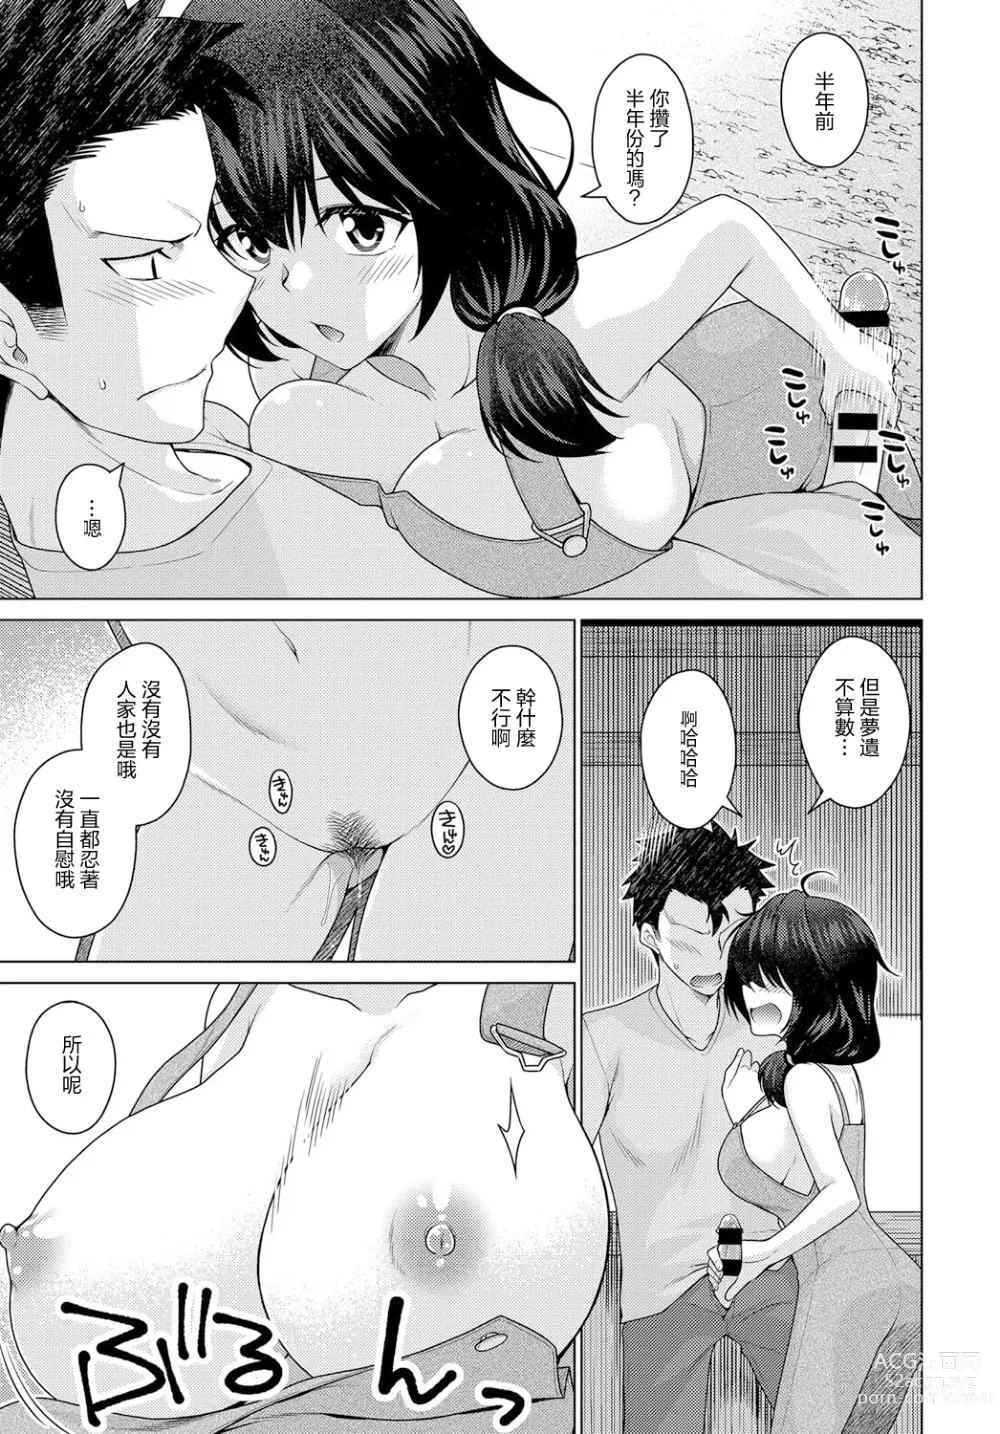 Page 5 of manga 宅在鄉下